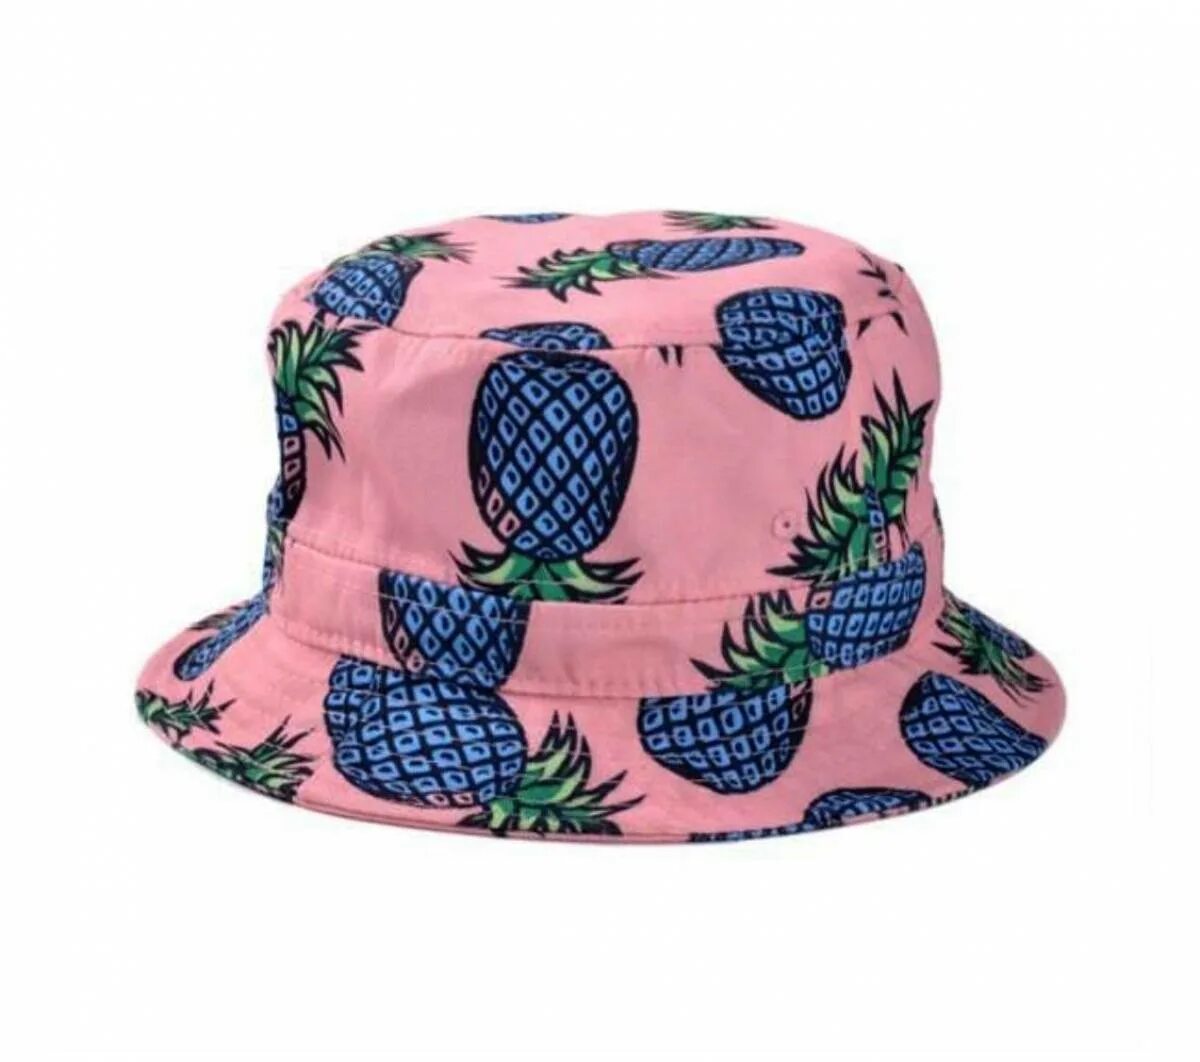 Купить панаму летнюю. Дачная Панама. Панамки 2021. Панама Termit Sun hat. Панама Bucket hat.